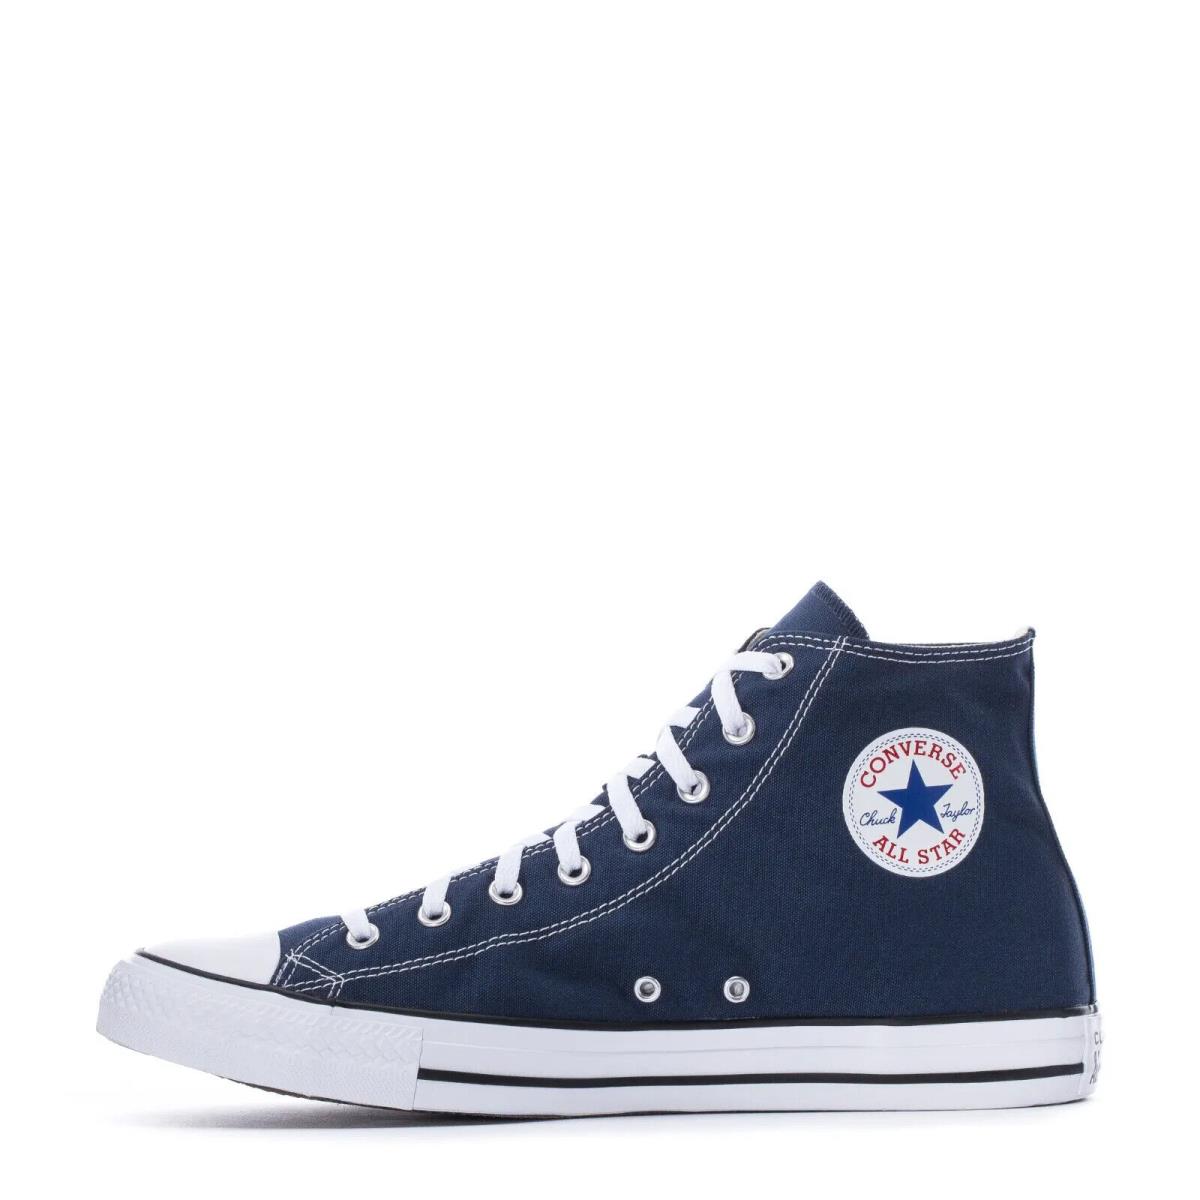 Converse Chuck Taylor HI Core Blue White Black HI Top Casual Athletic Sneakers - Blue